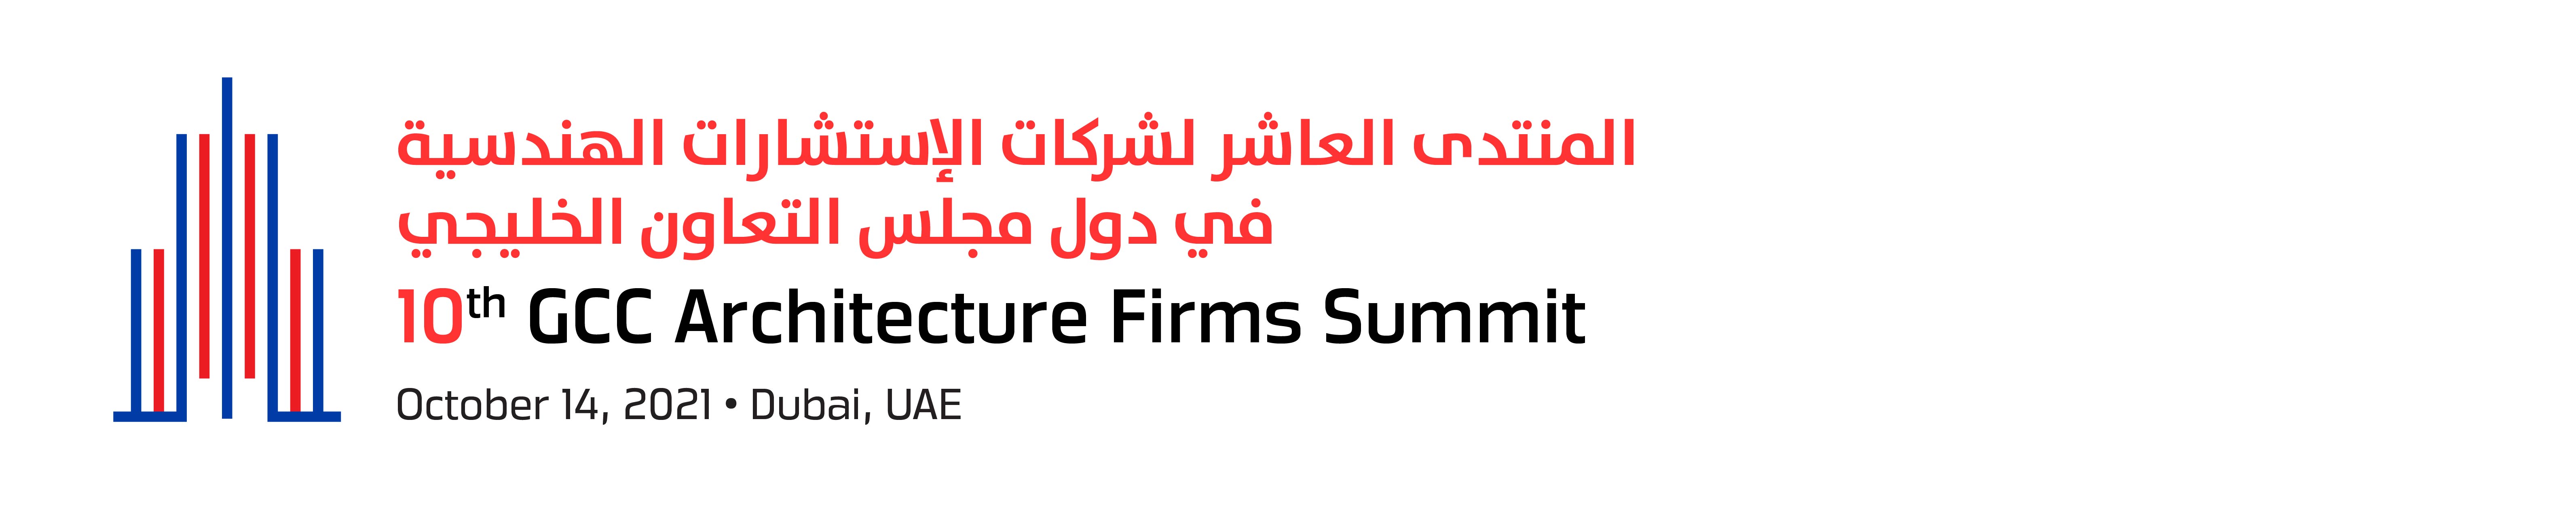 10th GCC Architecture Firms Summit